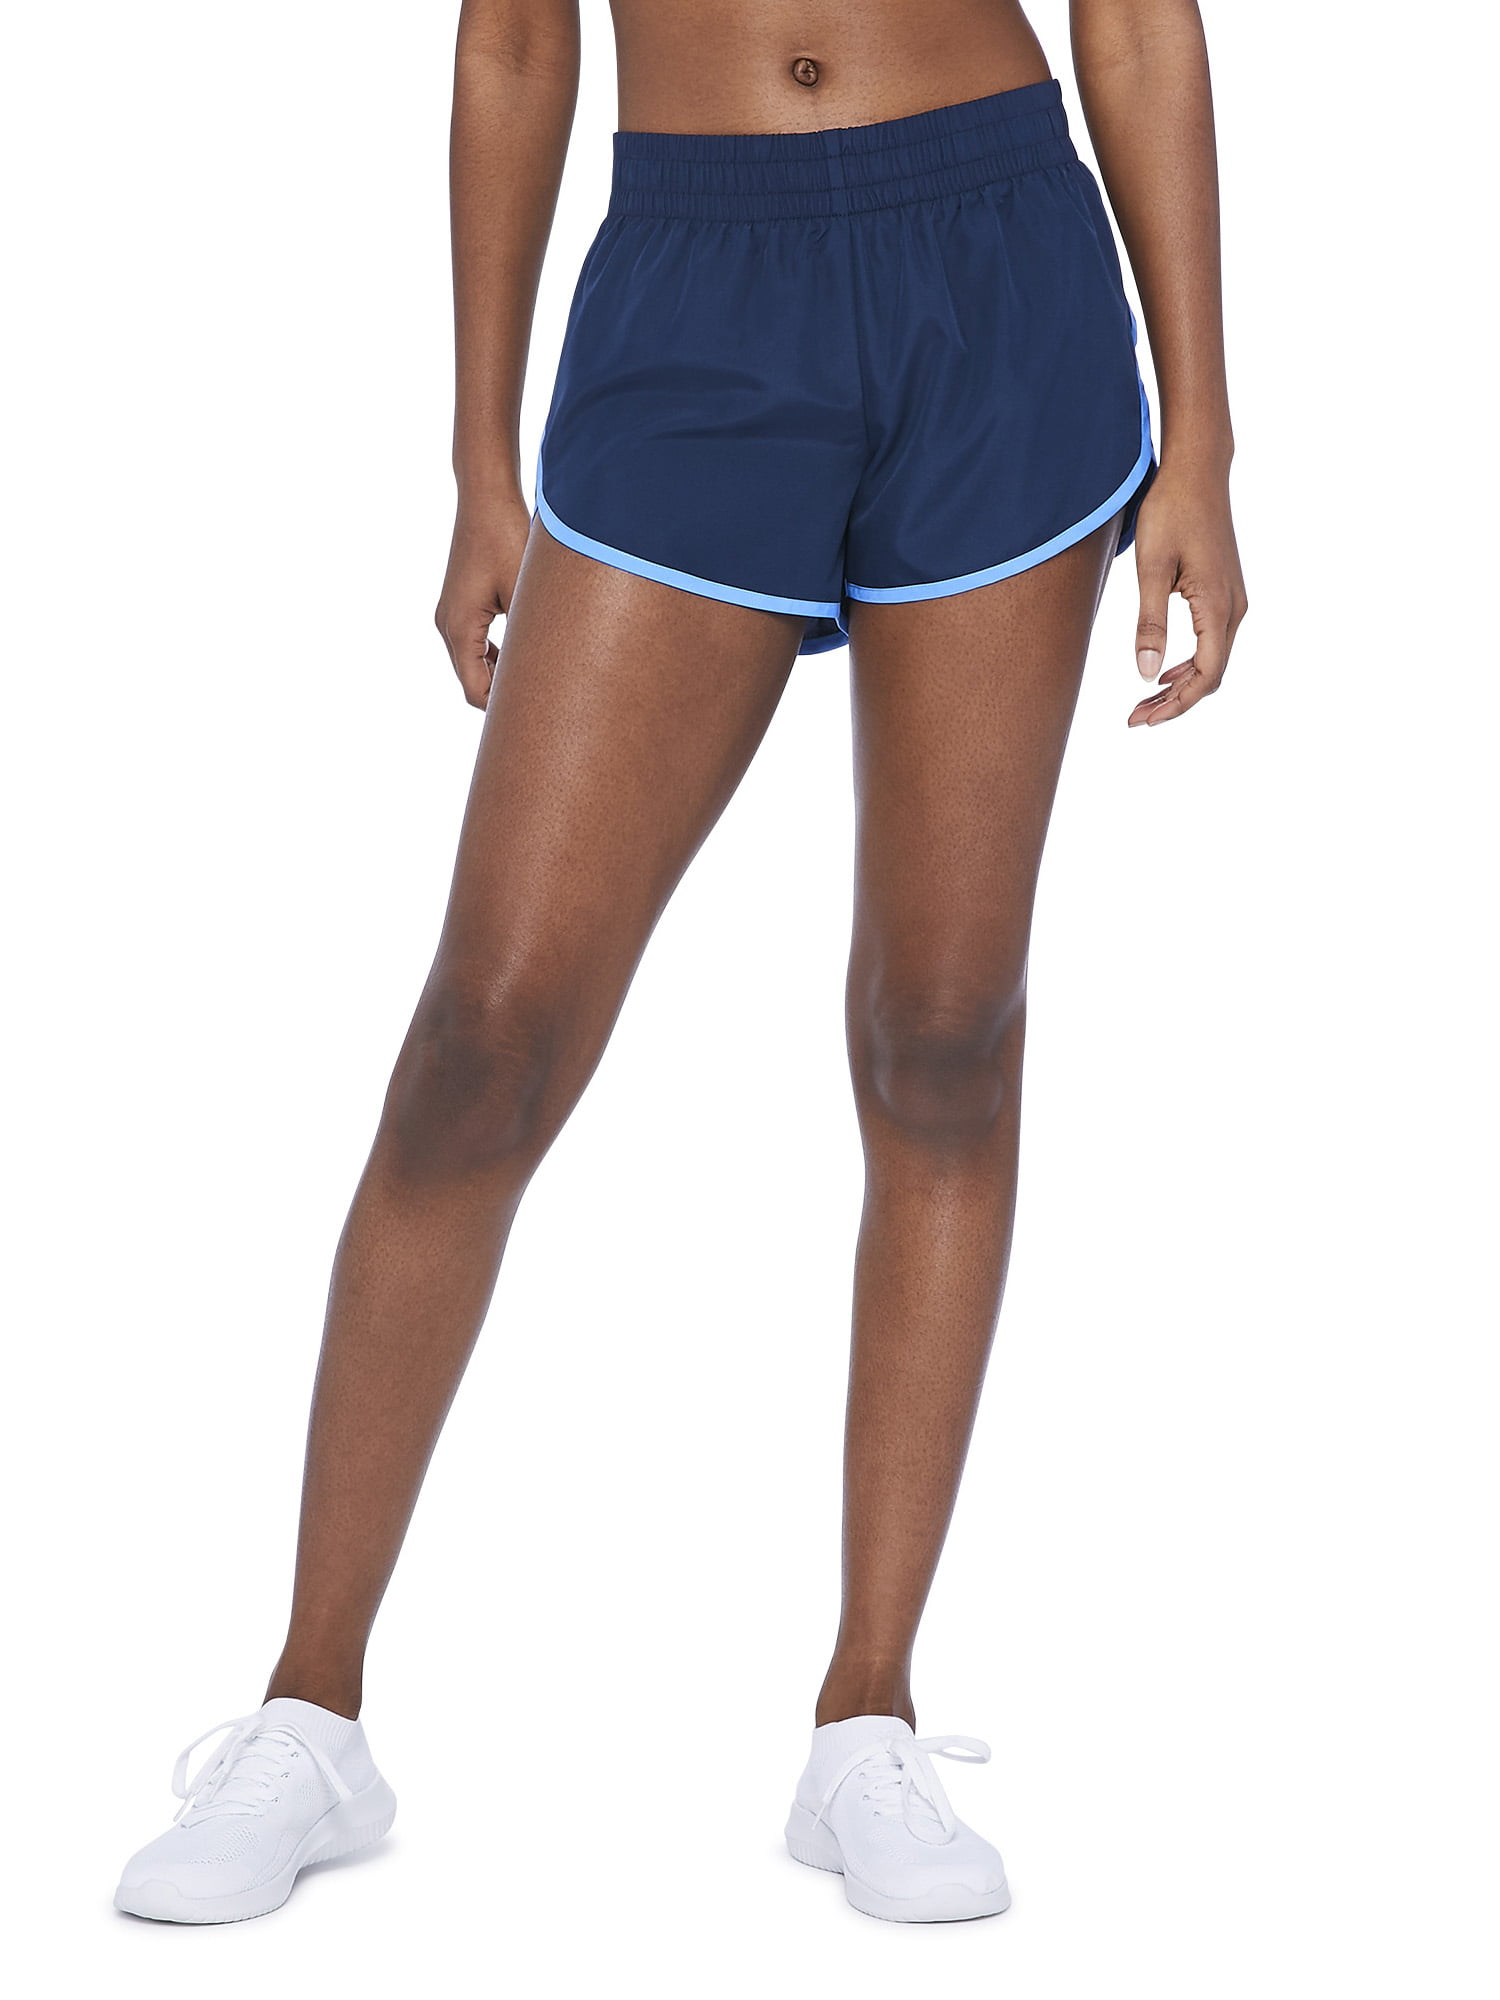 Athletic Works Blocked Woven Shorts - Walmart.com